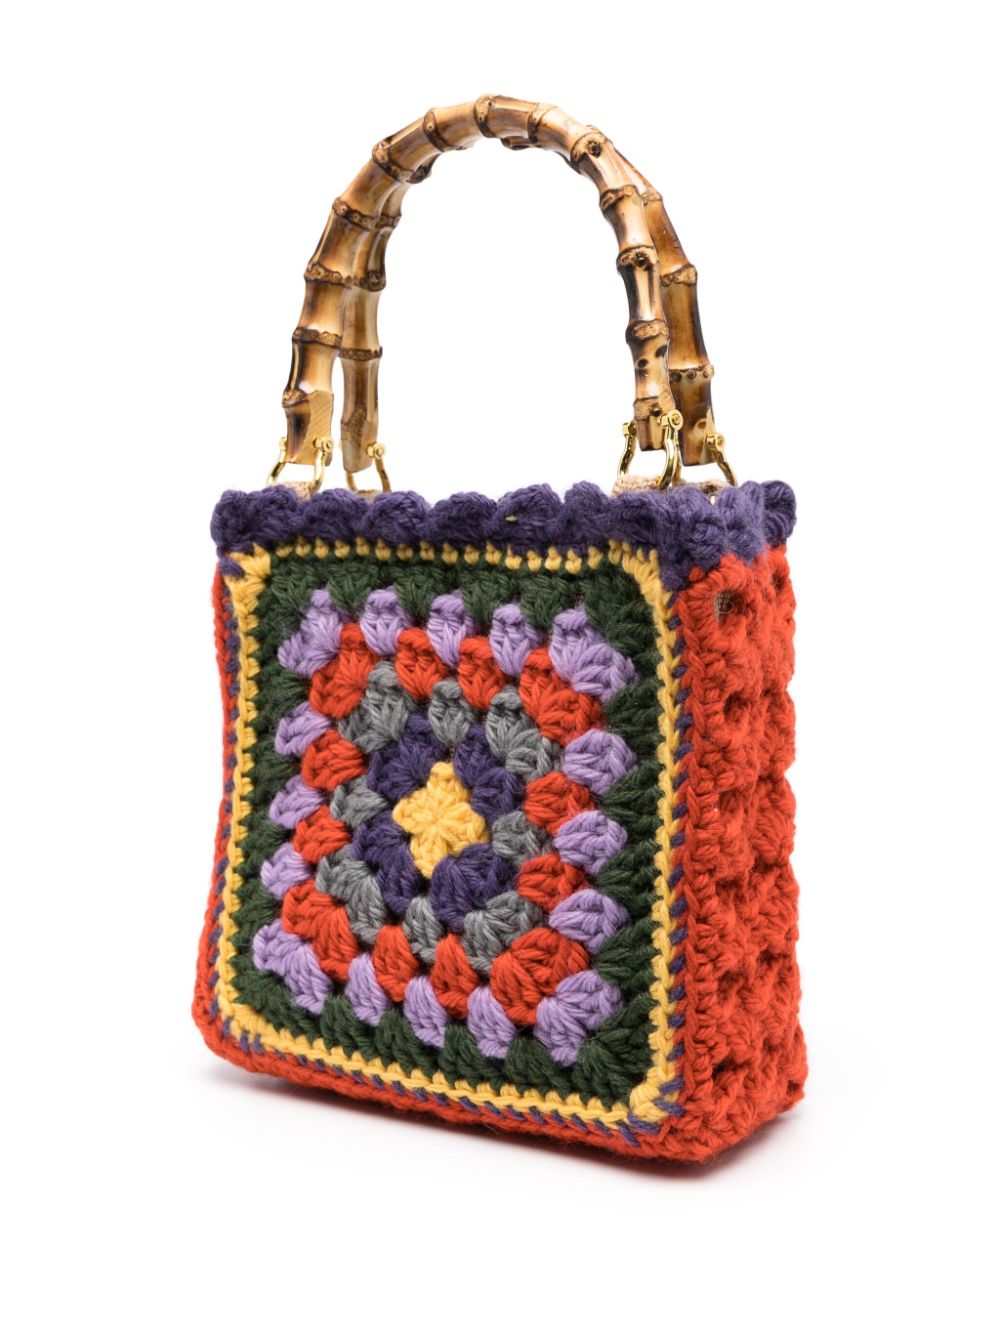 La Milanesa LA MILANESA- Small Crochet Handbag